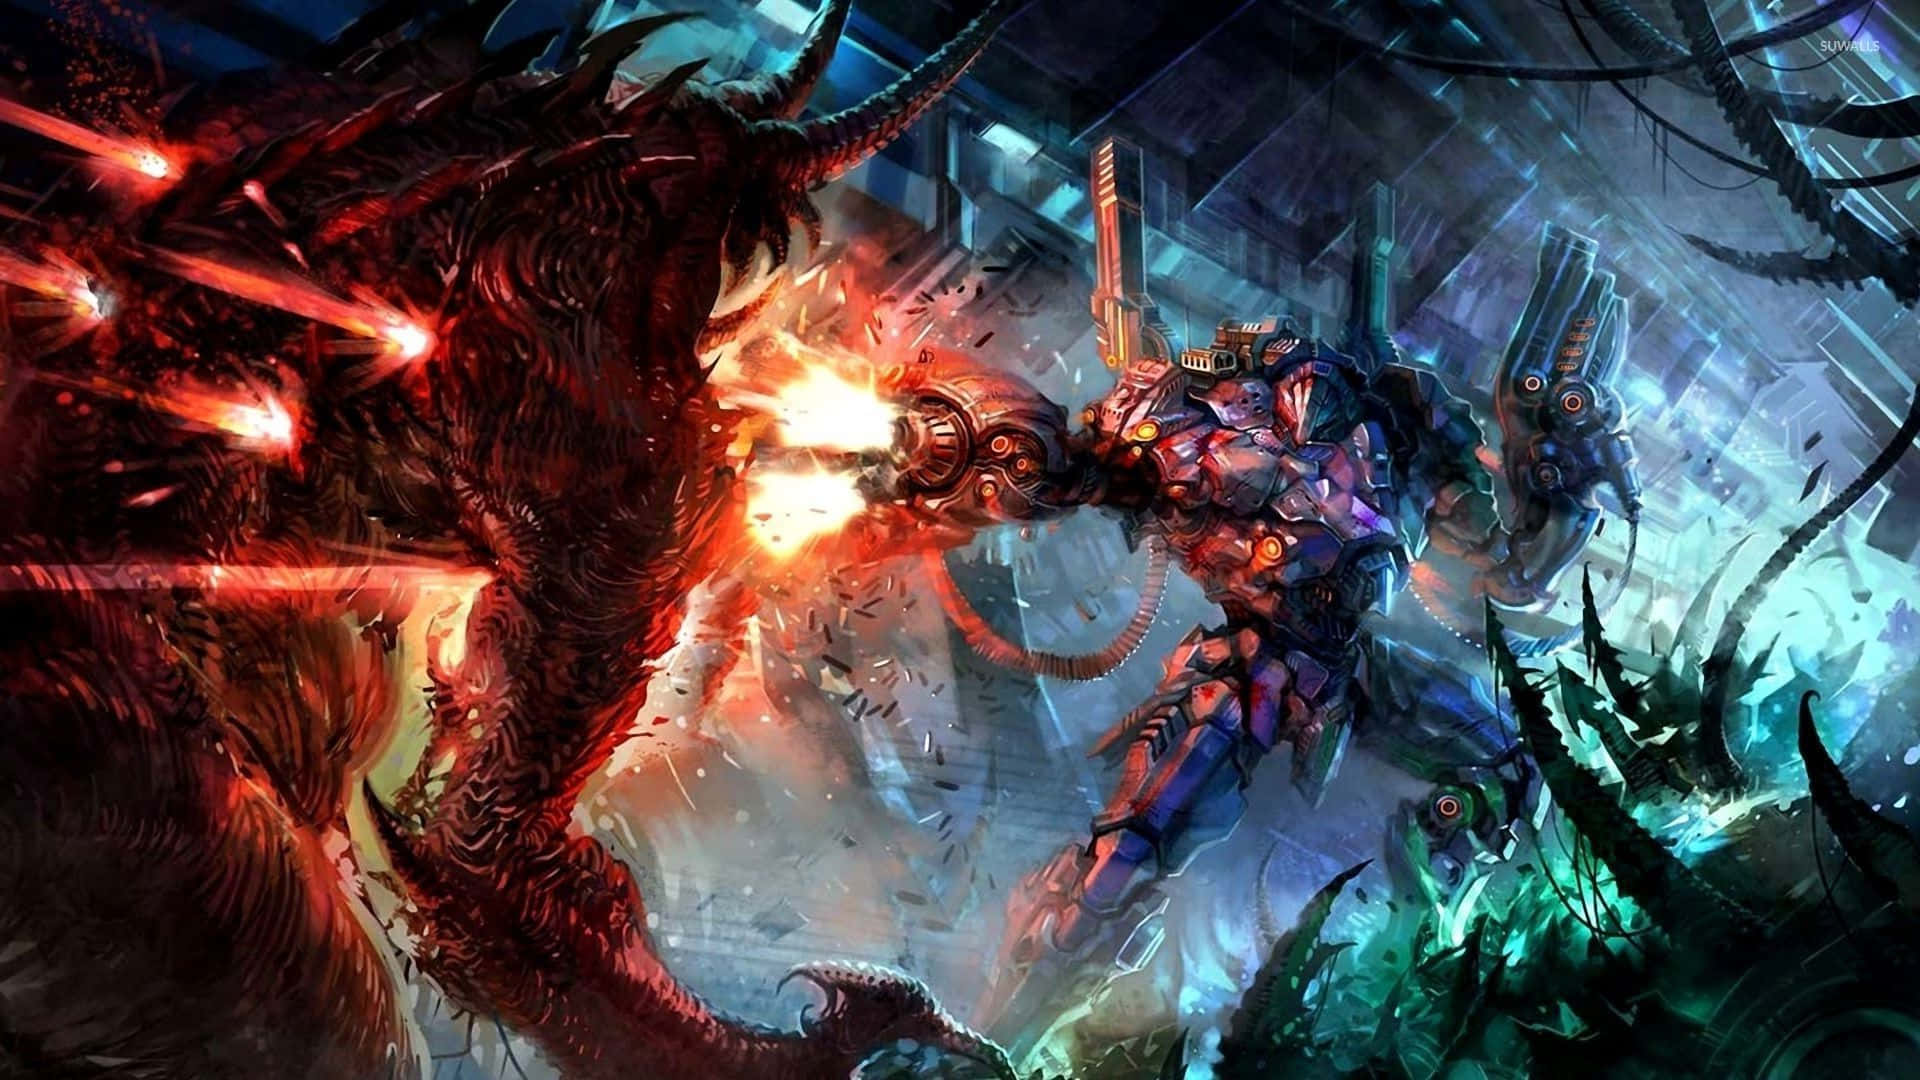 Two powerful demons clash in an epic battle Wallpaper